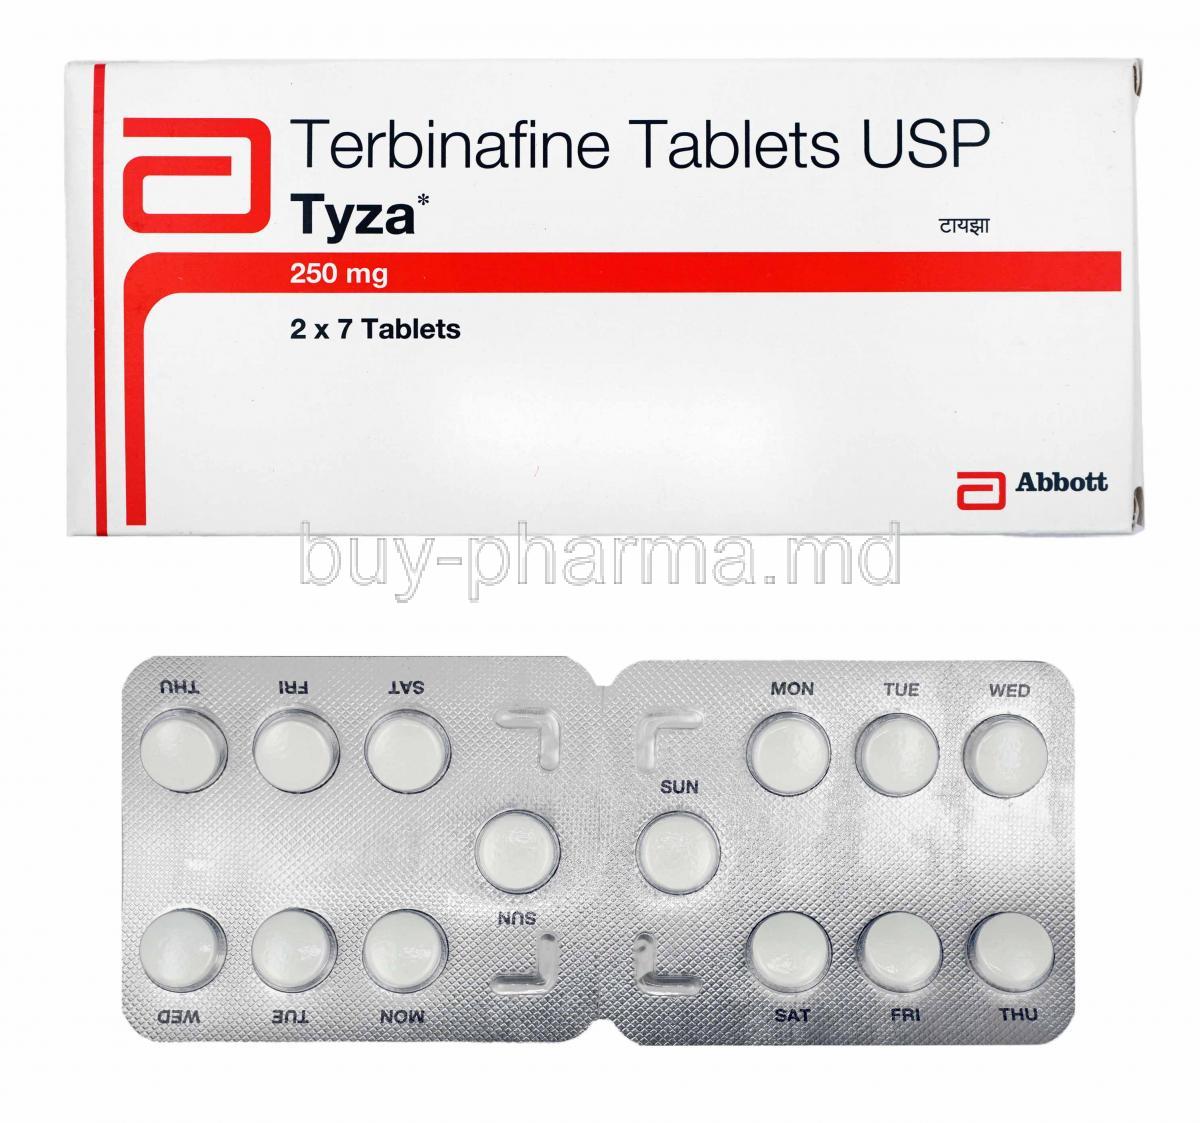 Tyza, Terbinafine box and tablets